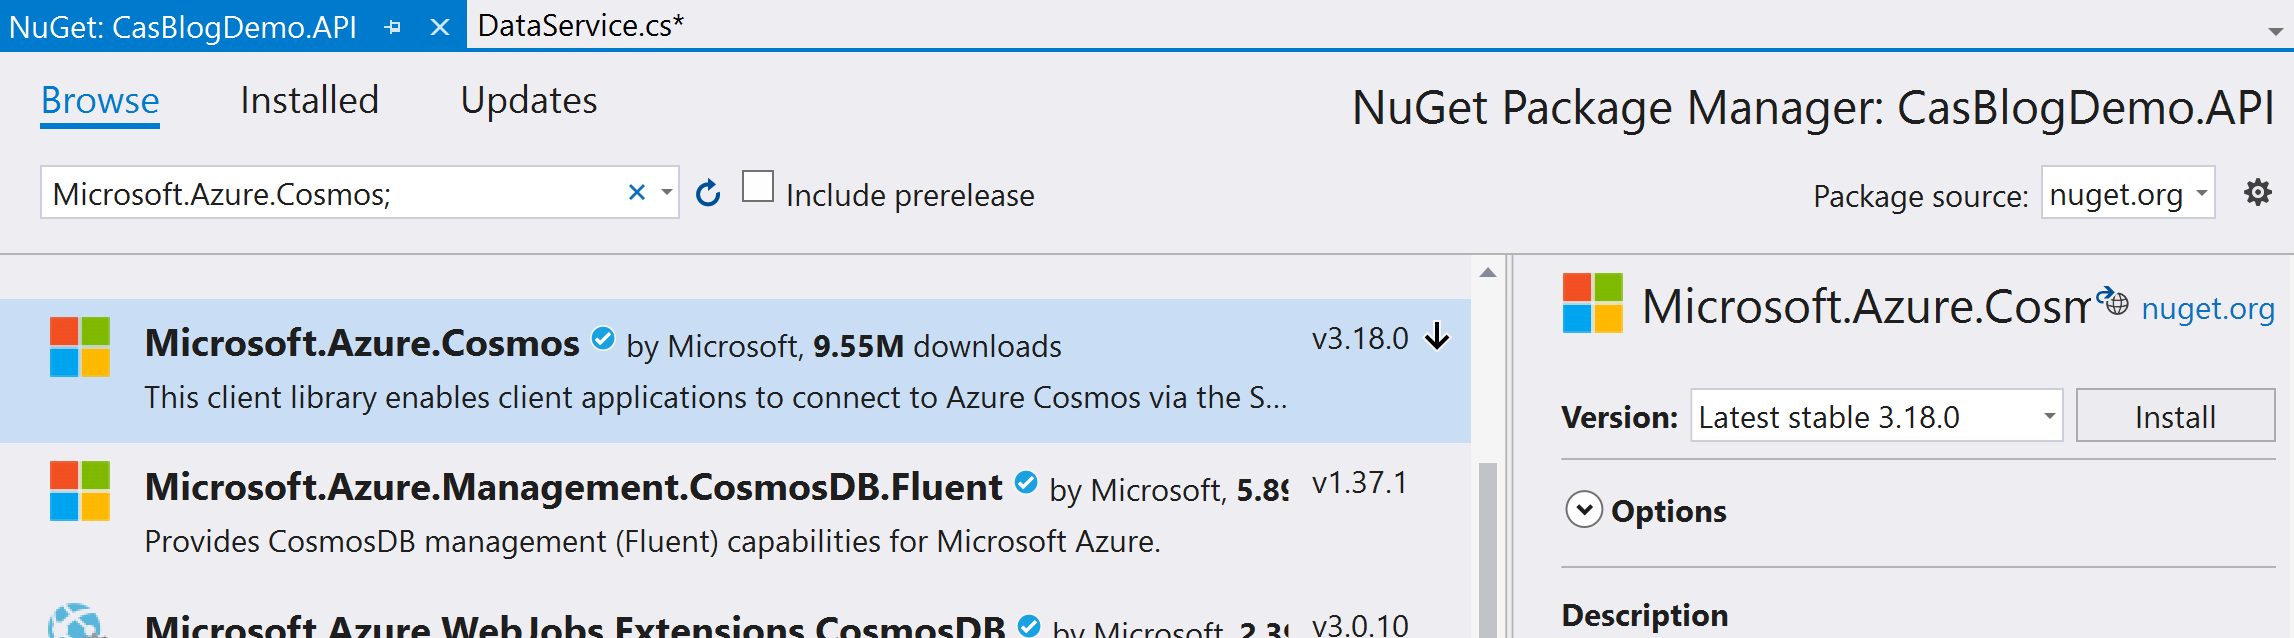 Adding the Microsoft.Azure.Cosmos